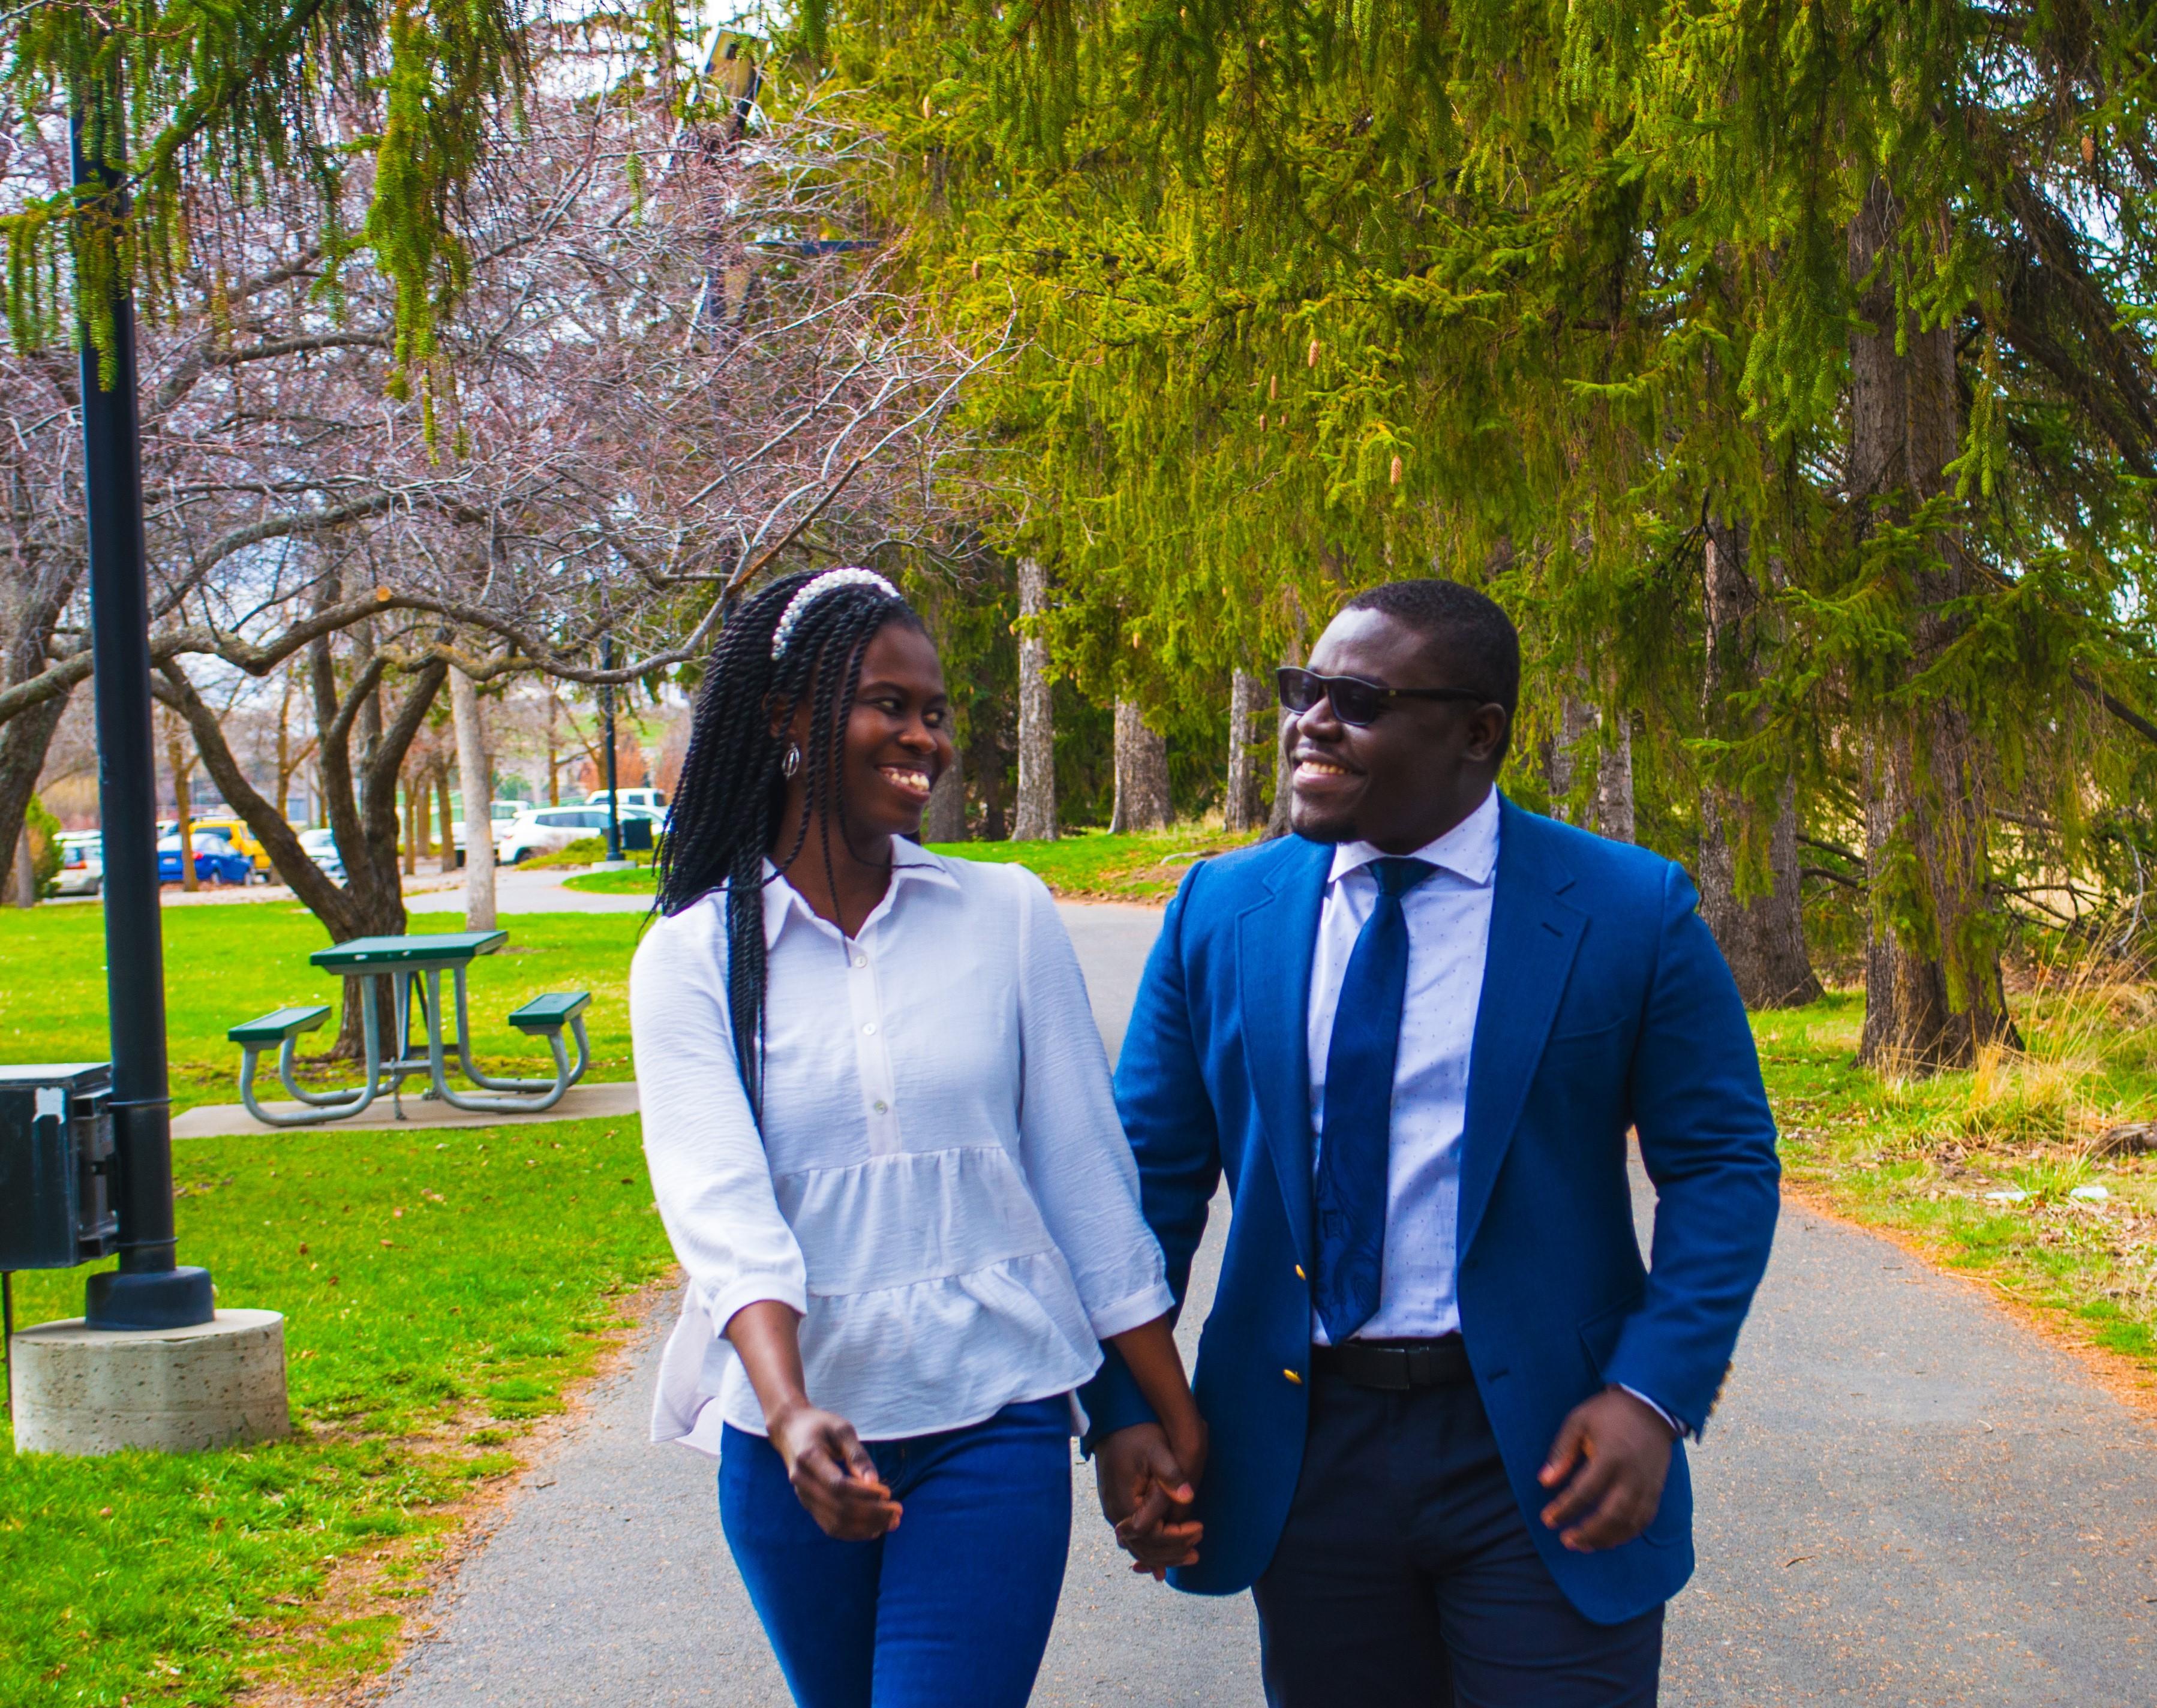 The Wedding Website of Emmanuella Owusu Ansah and Emmanuel Owusu Poku